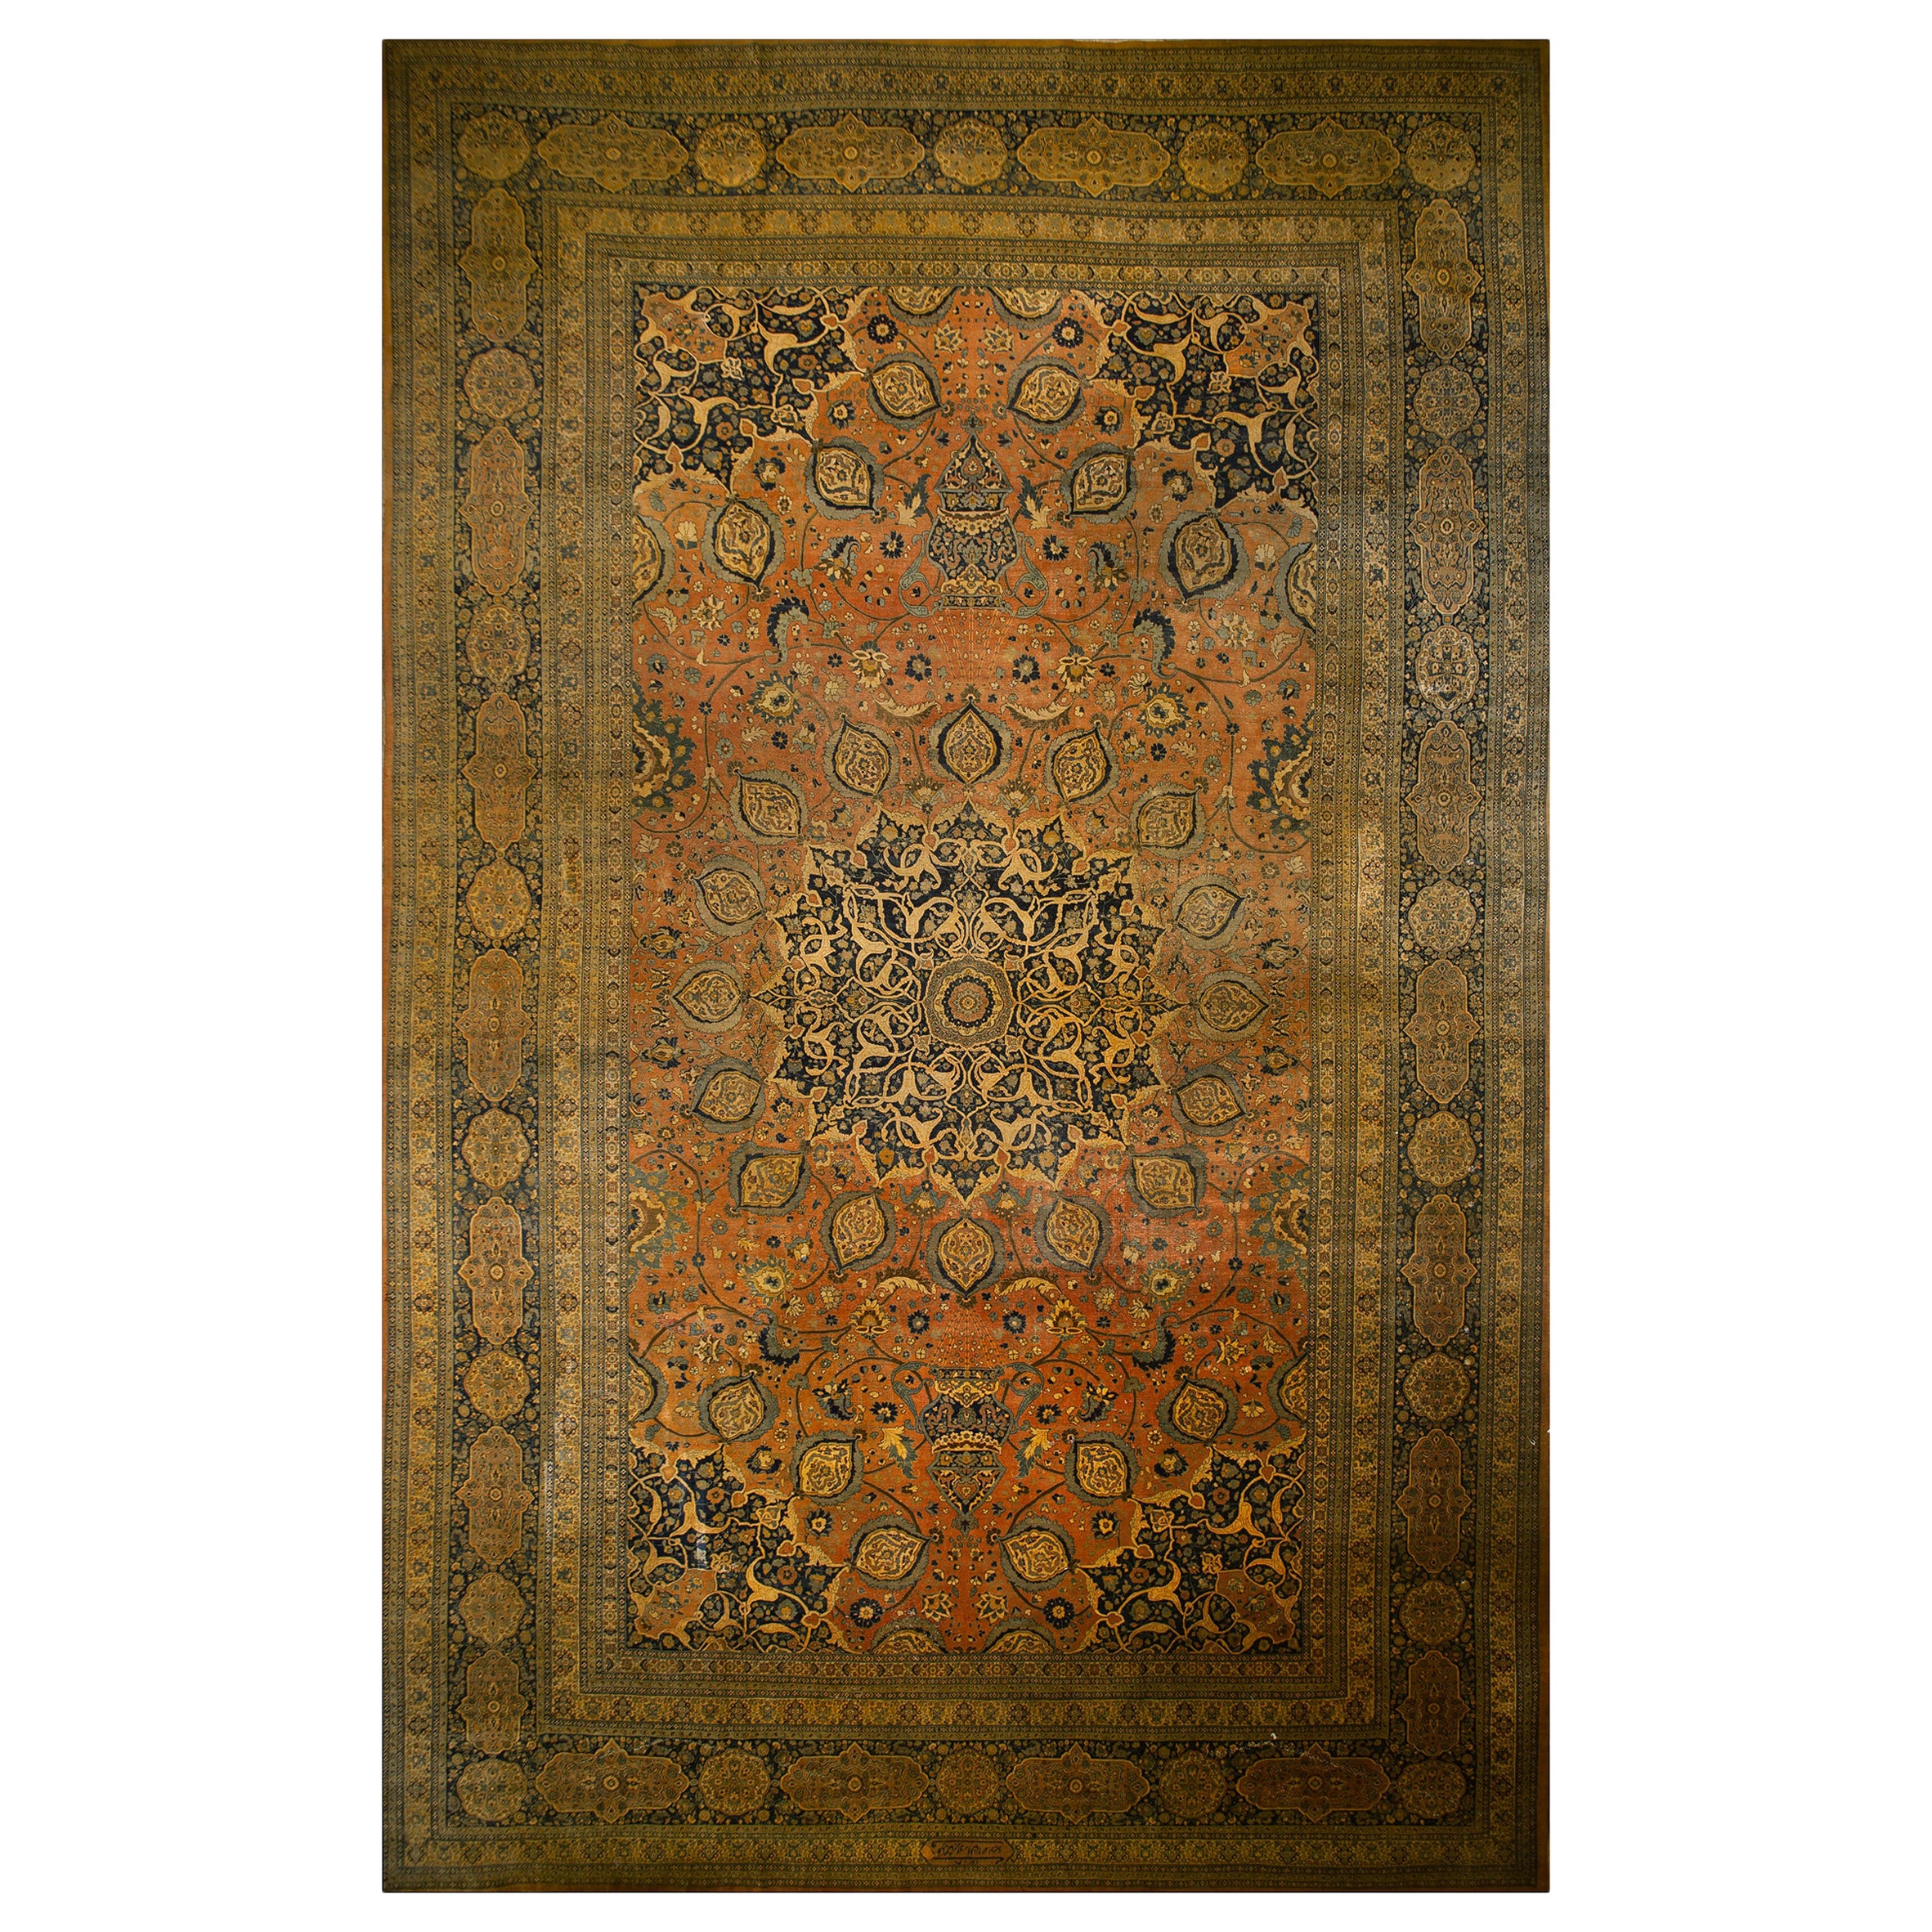 Late 19th Century Persian Tabriz Haji Jalili Carpet (14'4" x 22'7" - 437 x 688 ) For Sale